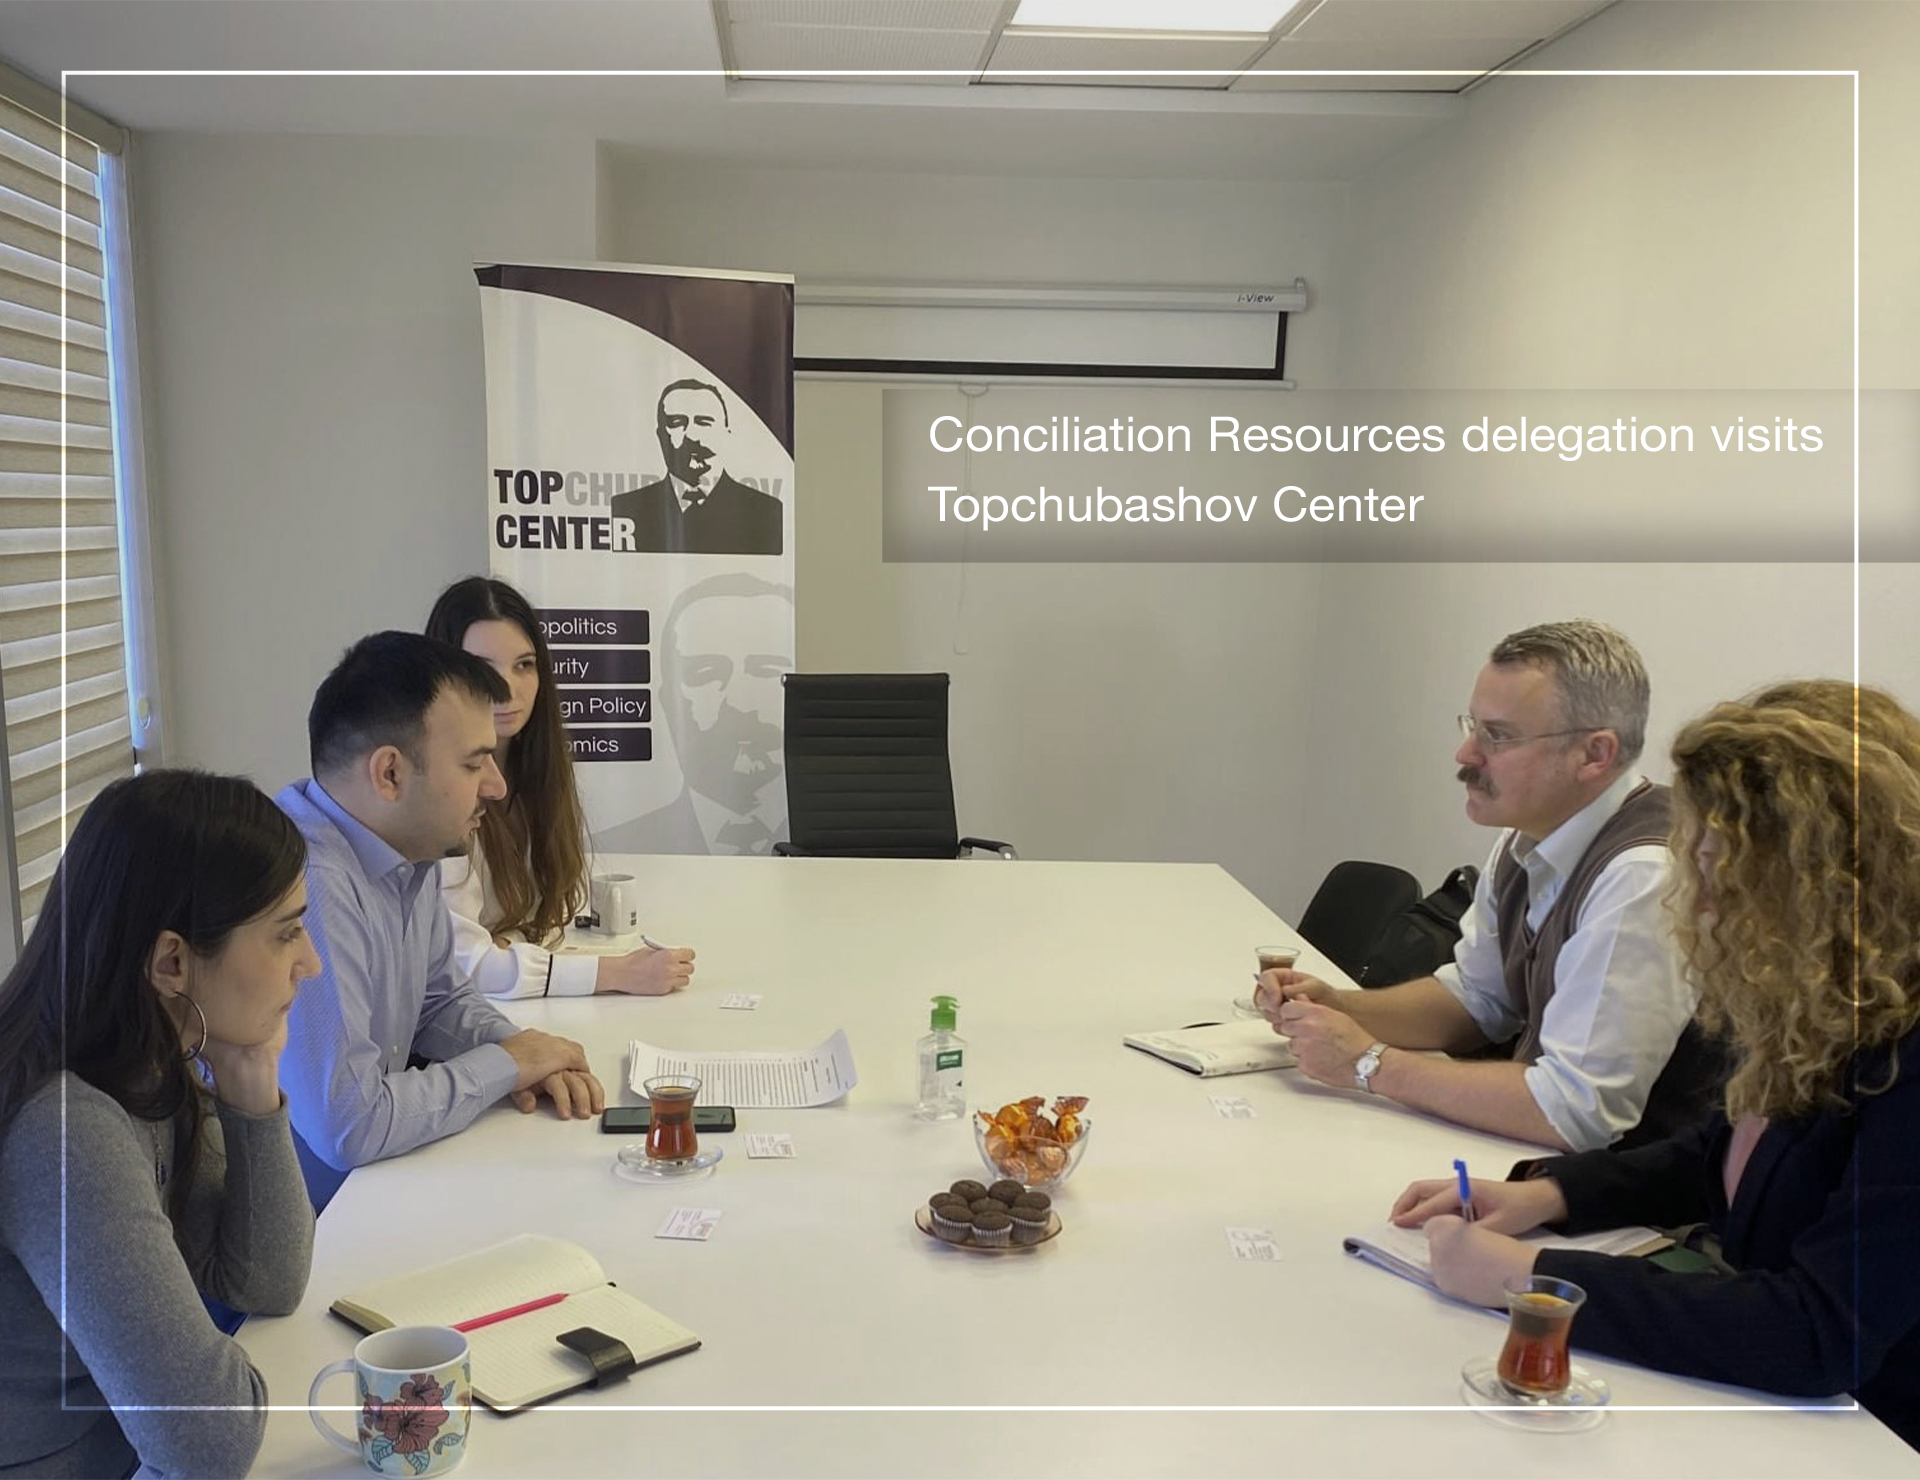 Conciliation Resources delegation visits Topchubashov Center